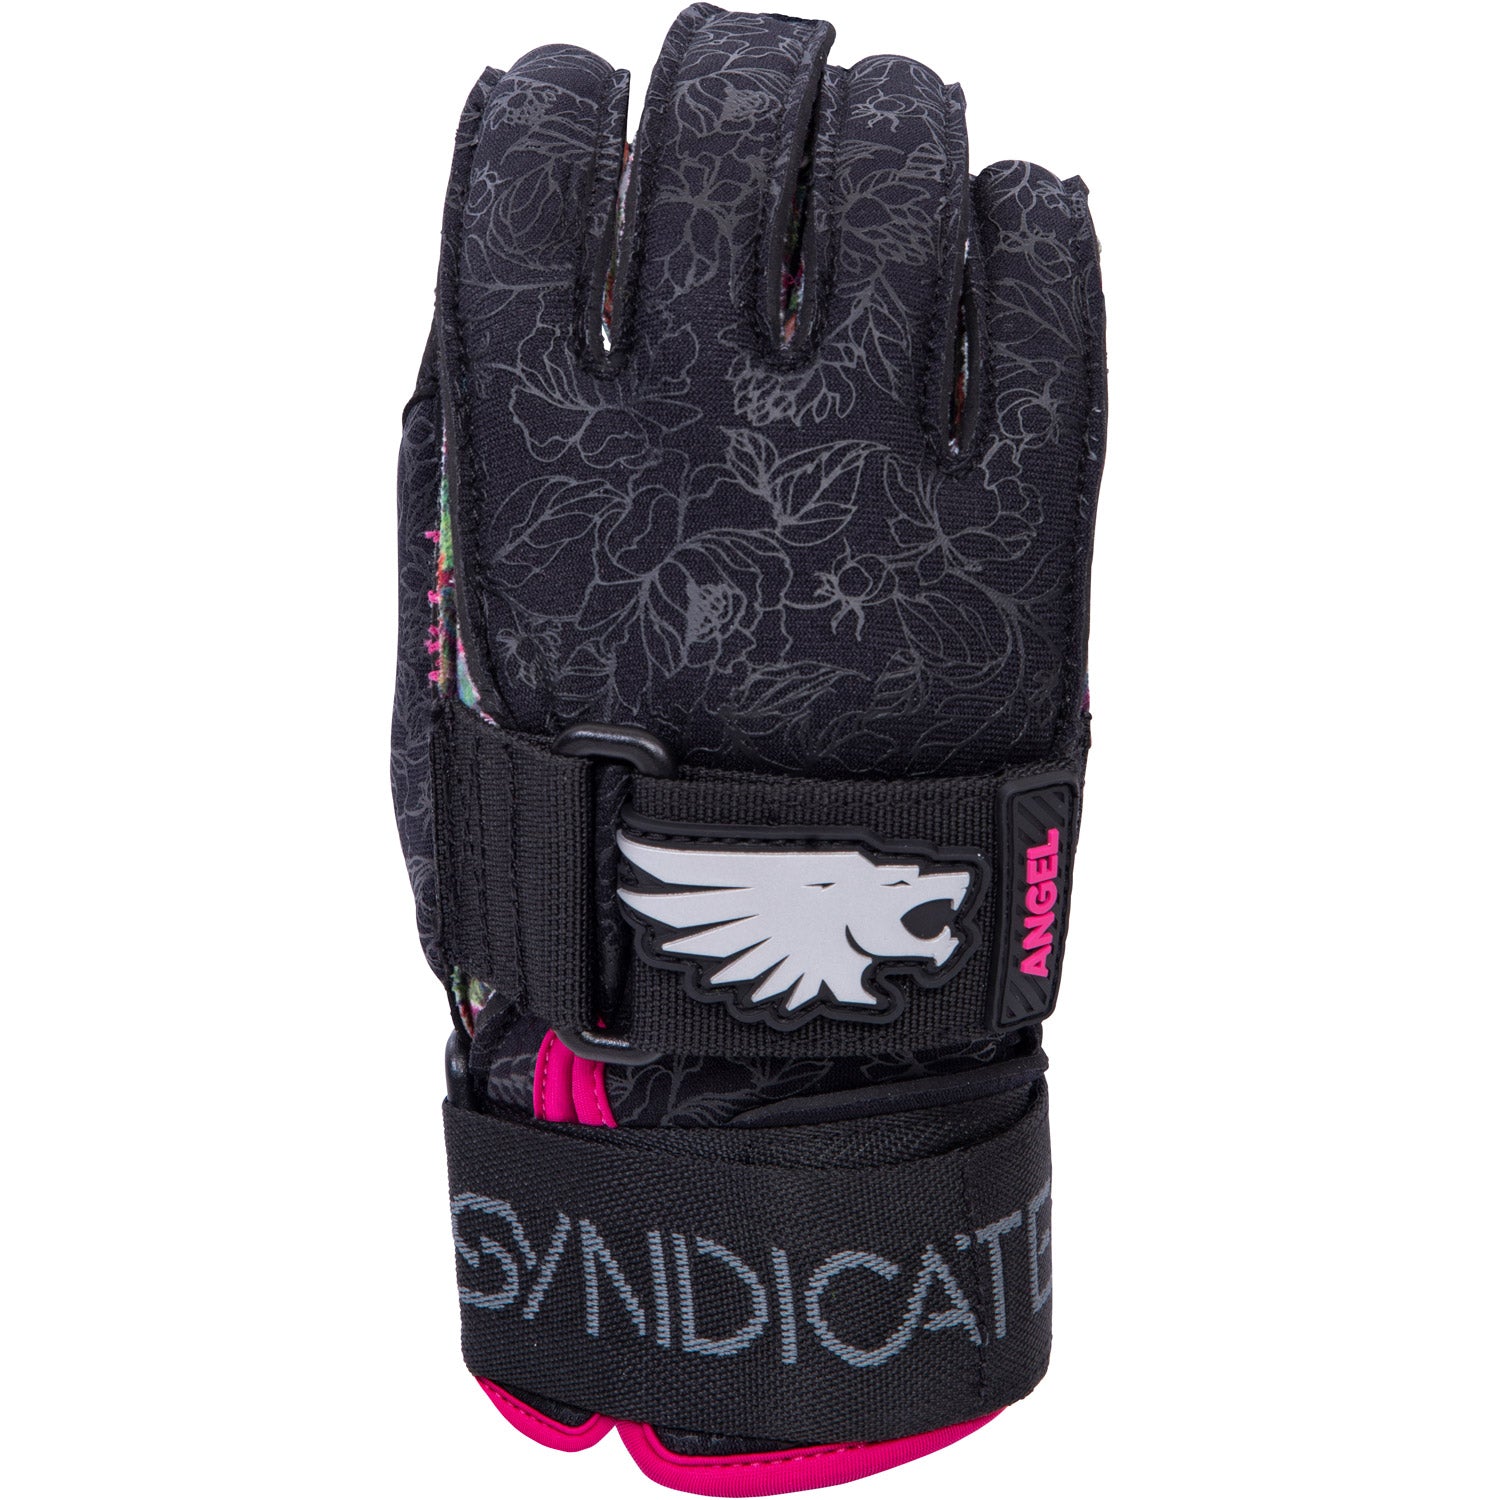 Syndicate Angel Inside Out Slalom Glove